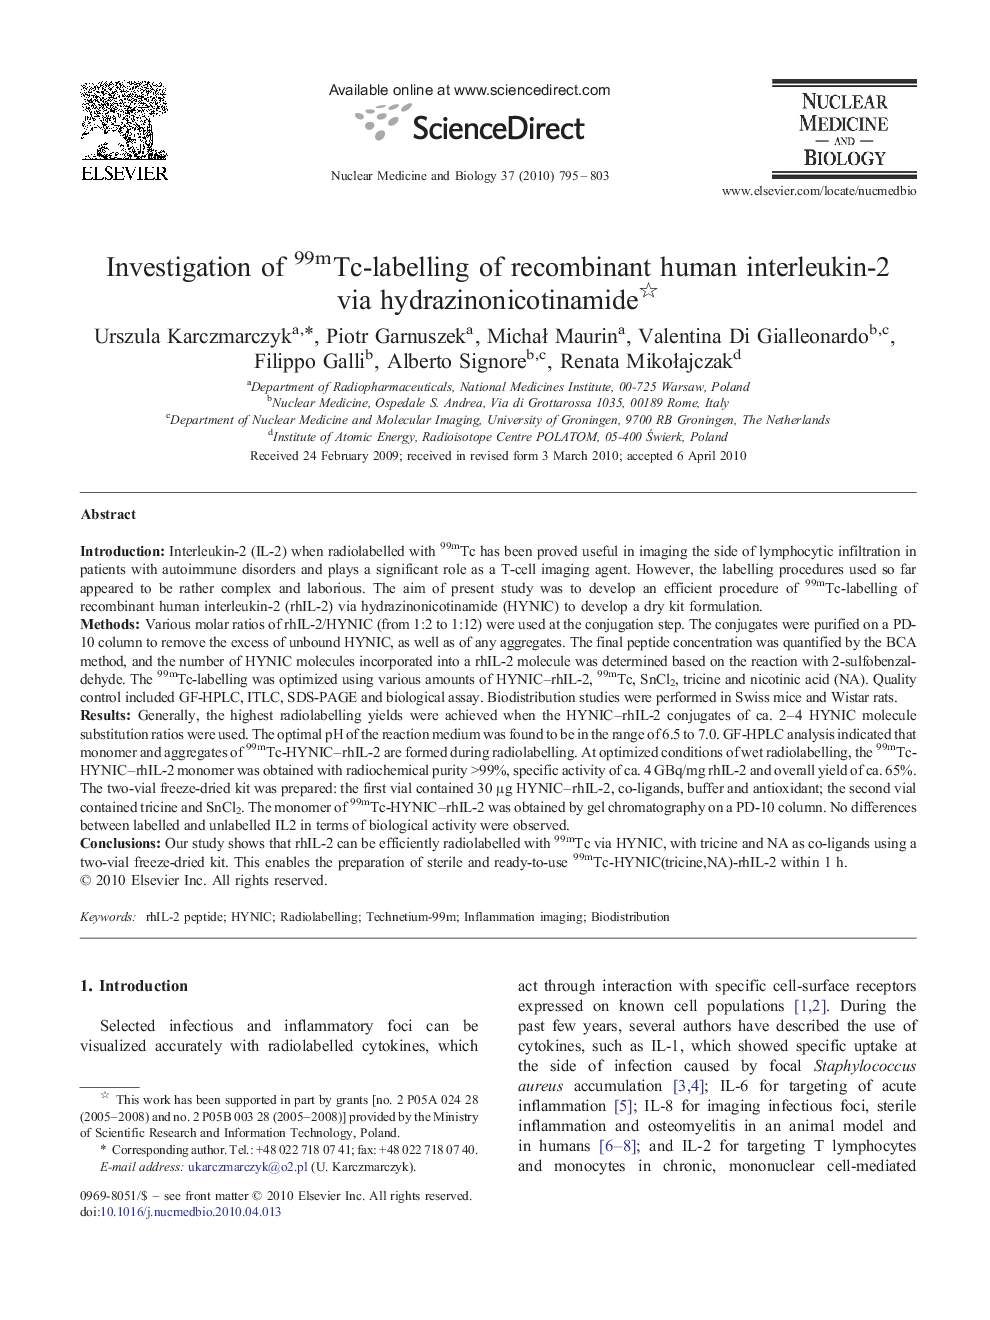 Investigation of 99mTc-labelling of recombinant human interleukin-2 via hydrazinonicotinamide 